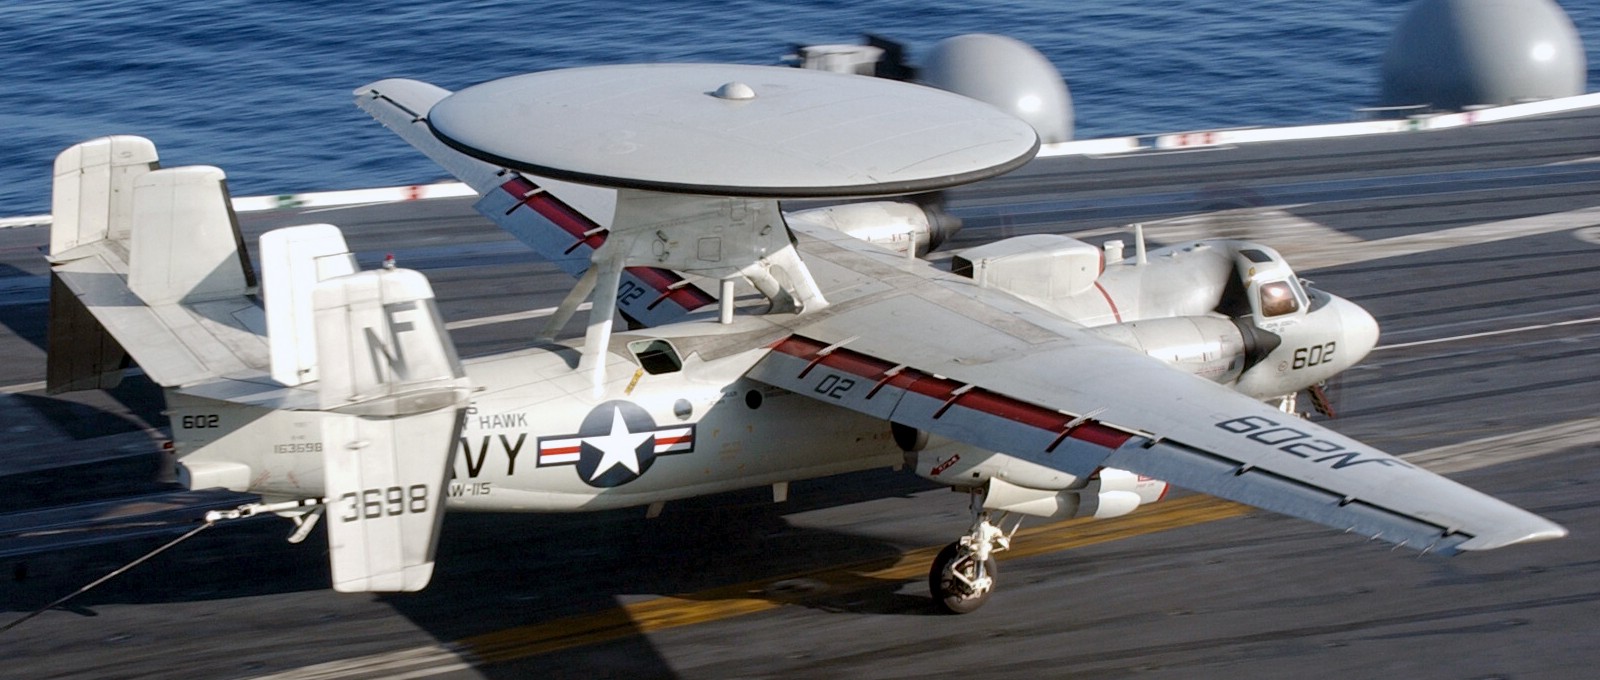 vaw-115 liberty bells carrier airborne early warning squadron us navy grumman e-2c hawkeye cvw-5 uss kitty hawk cv-63 11